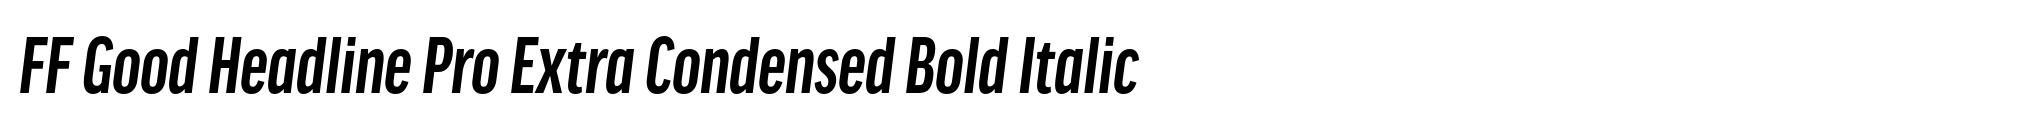 FF Good Headline Pro Extra Condensed Bold Italic image